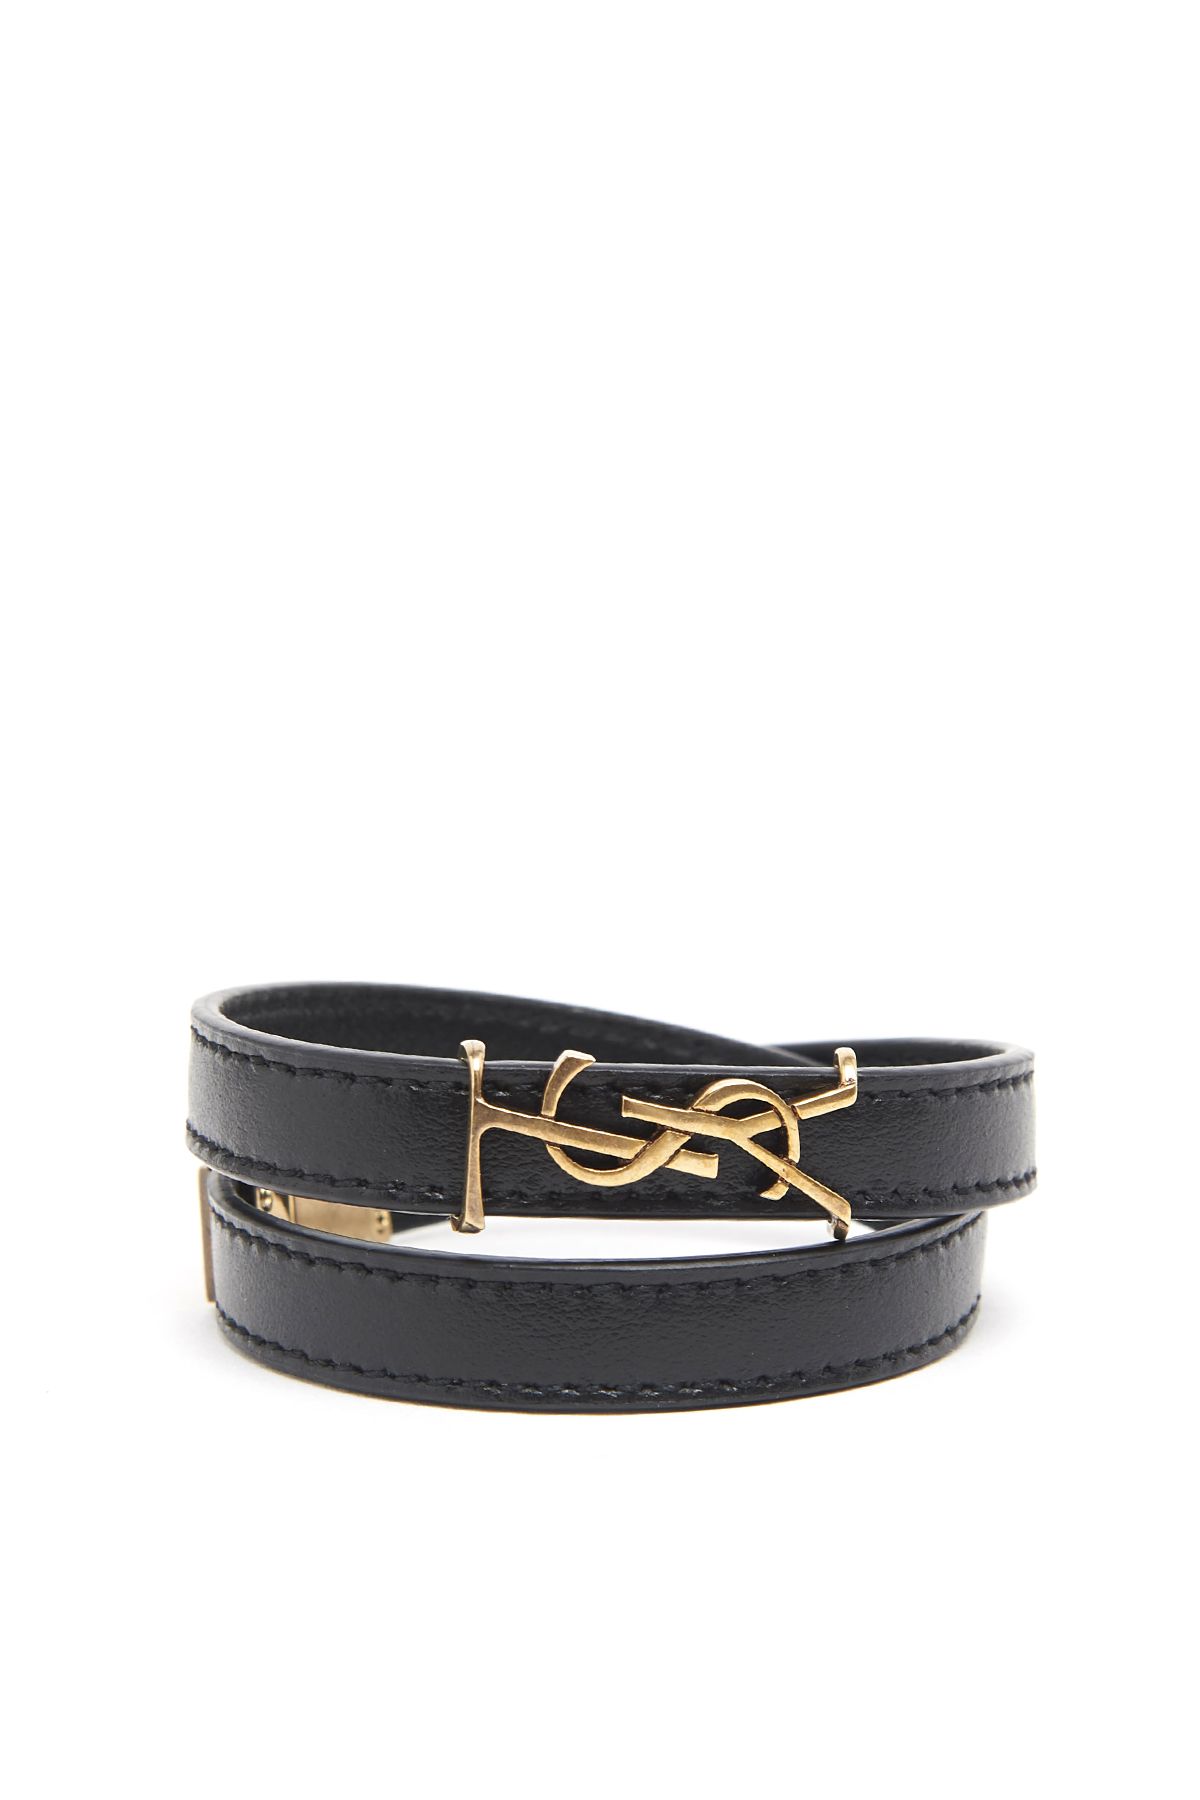 SAINT LAURENT Leather Bracelet in Black | ModeSens